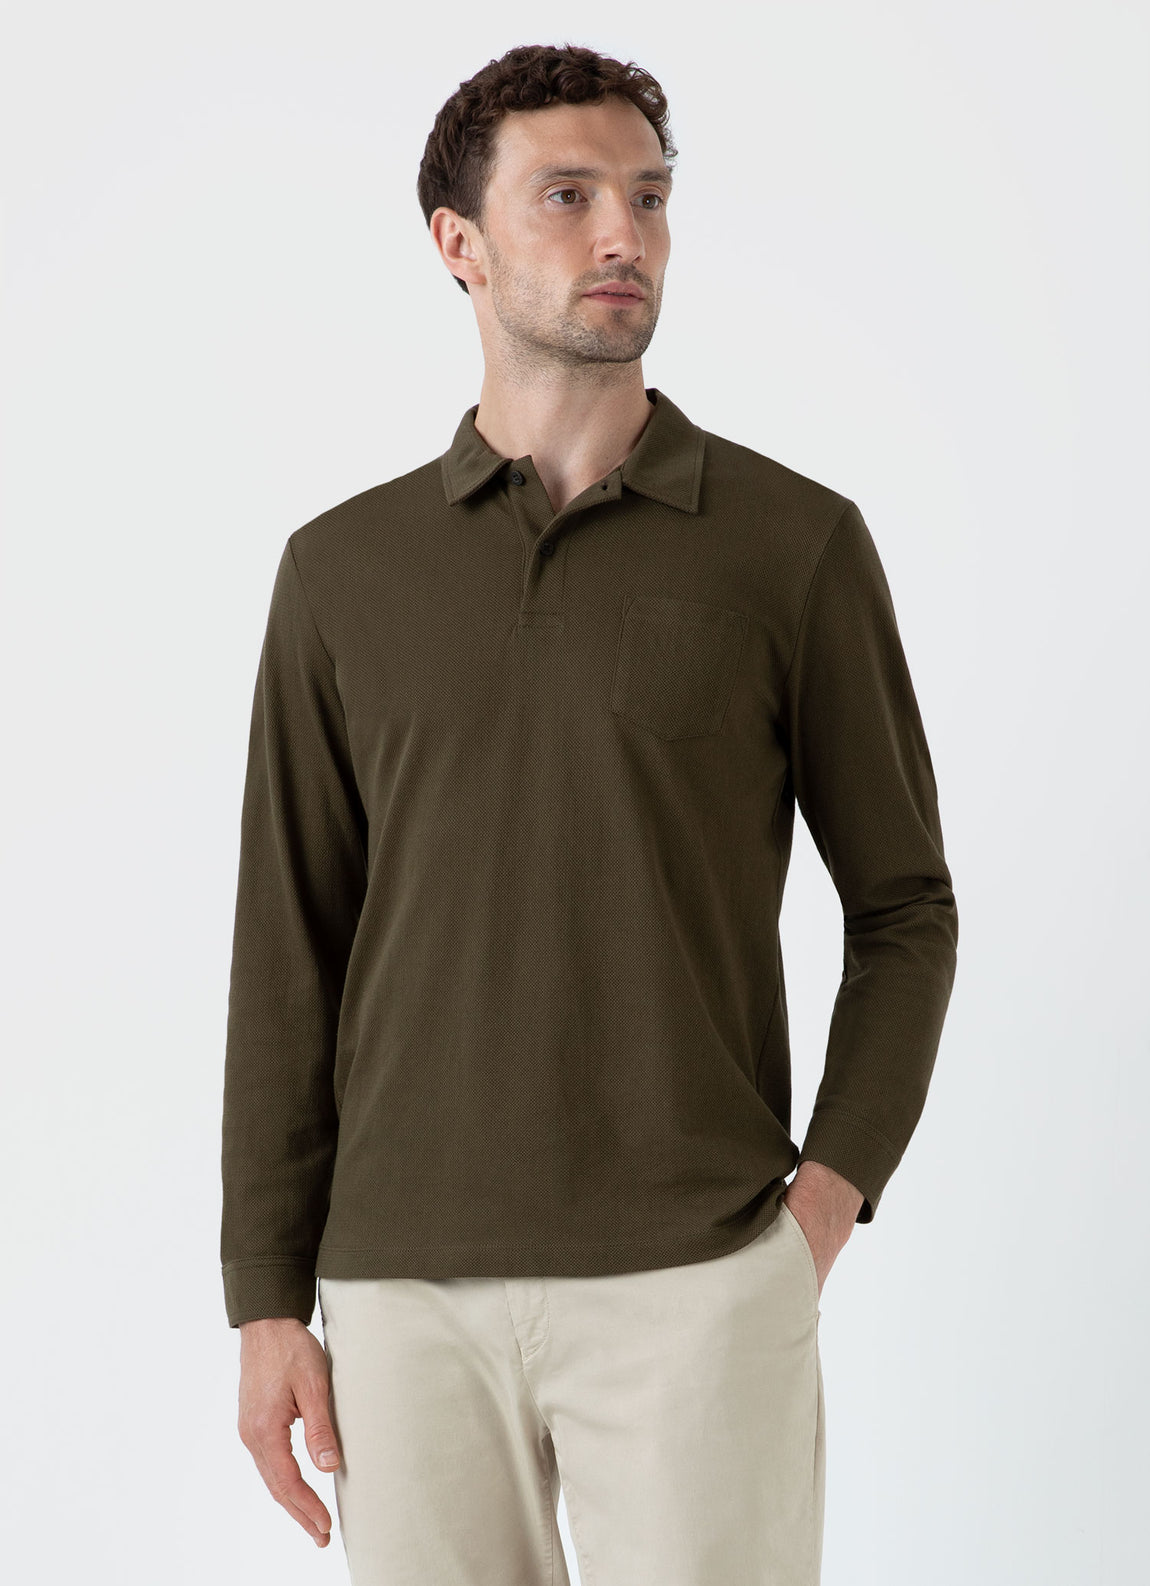 Men's Long Sleeve Riviera Polo Shirt in Dark Olive | Sunspel